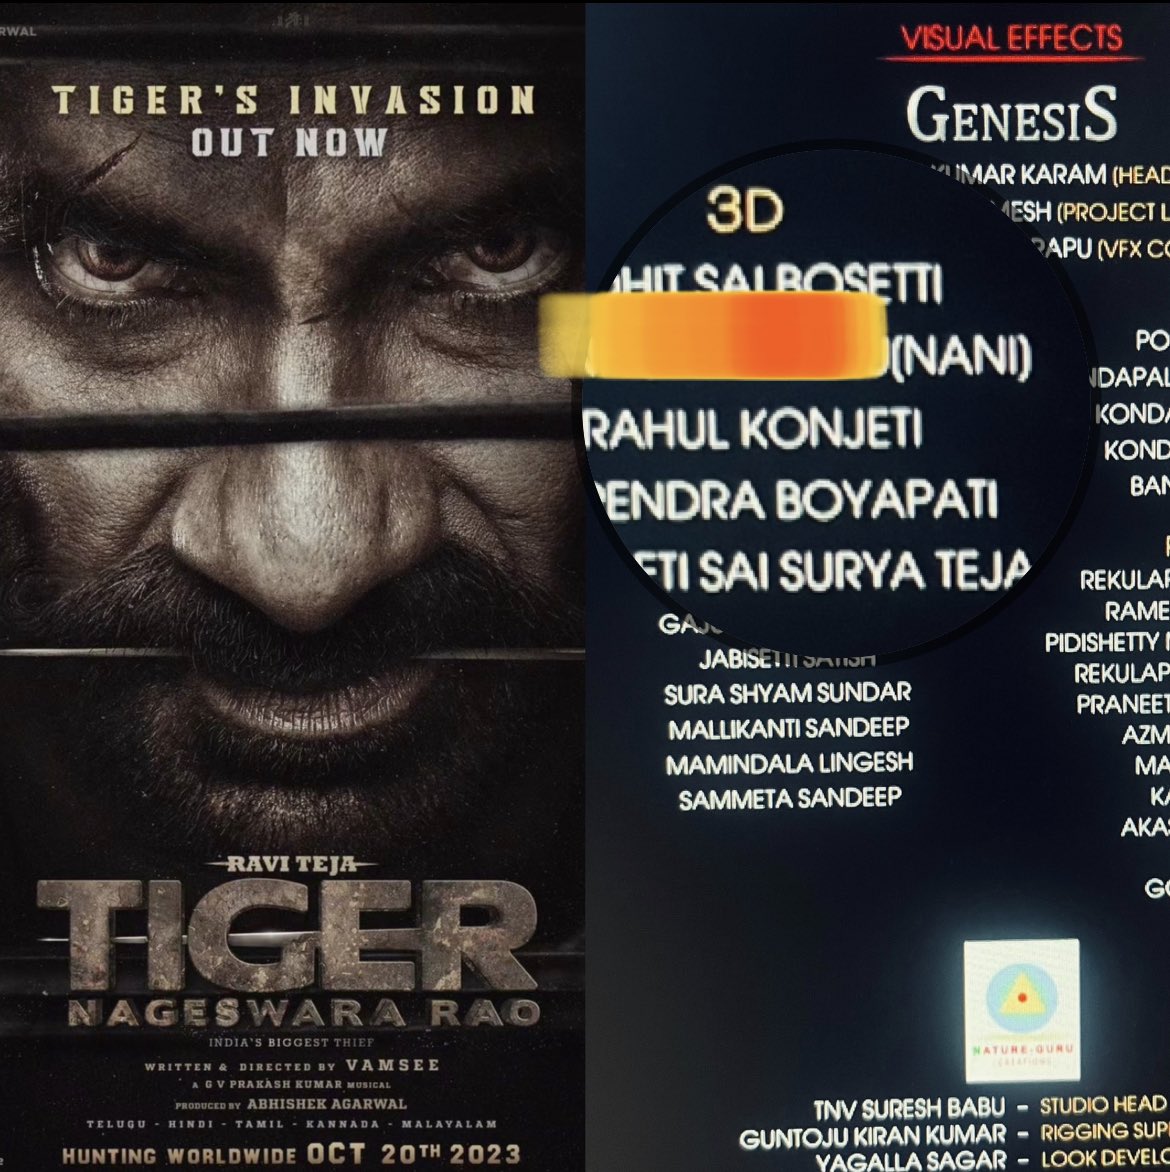 VFX Credits for ravi anna movie ❤️❤️
#TigerNageshwarRao